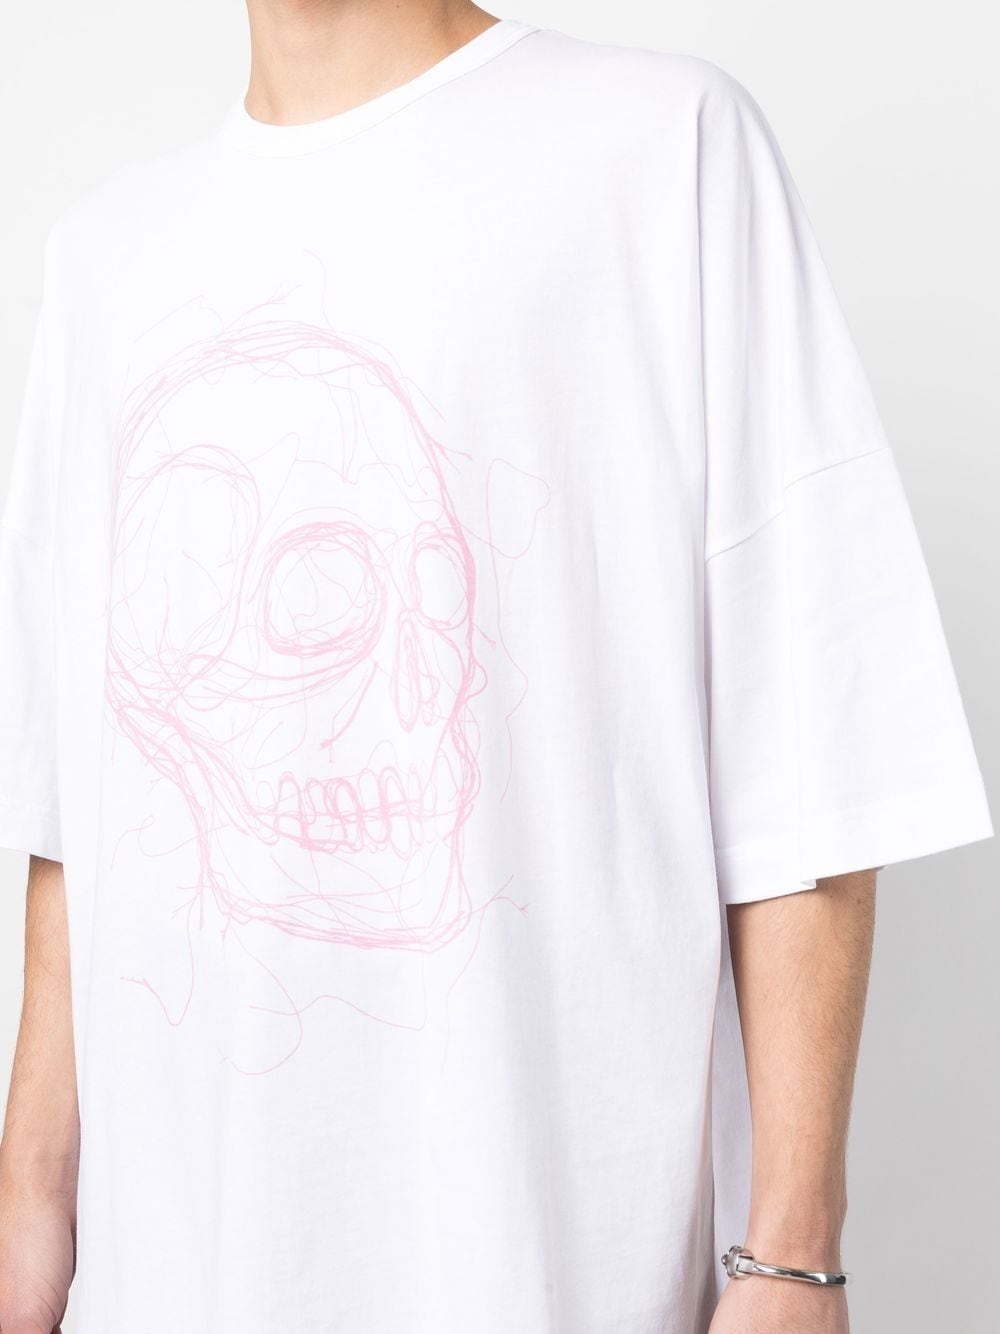 Alexander McQueen Lace Skull Print Short Sleeve Tee Whitered, $225